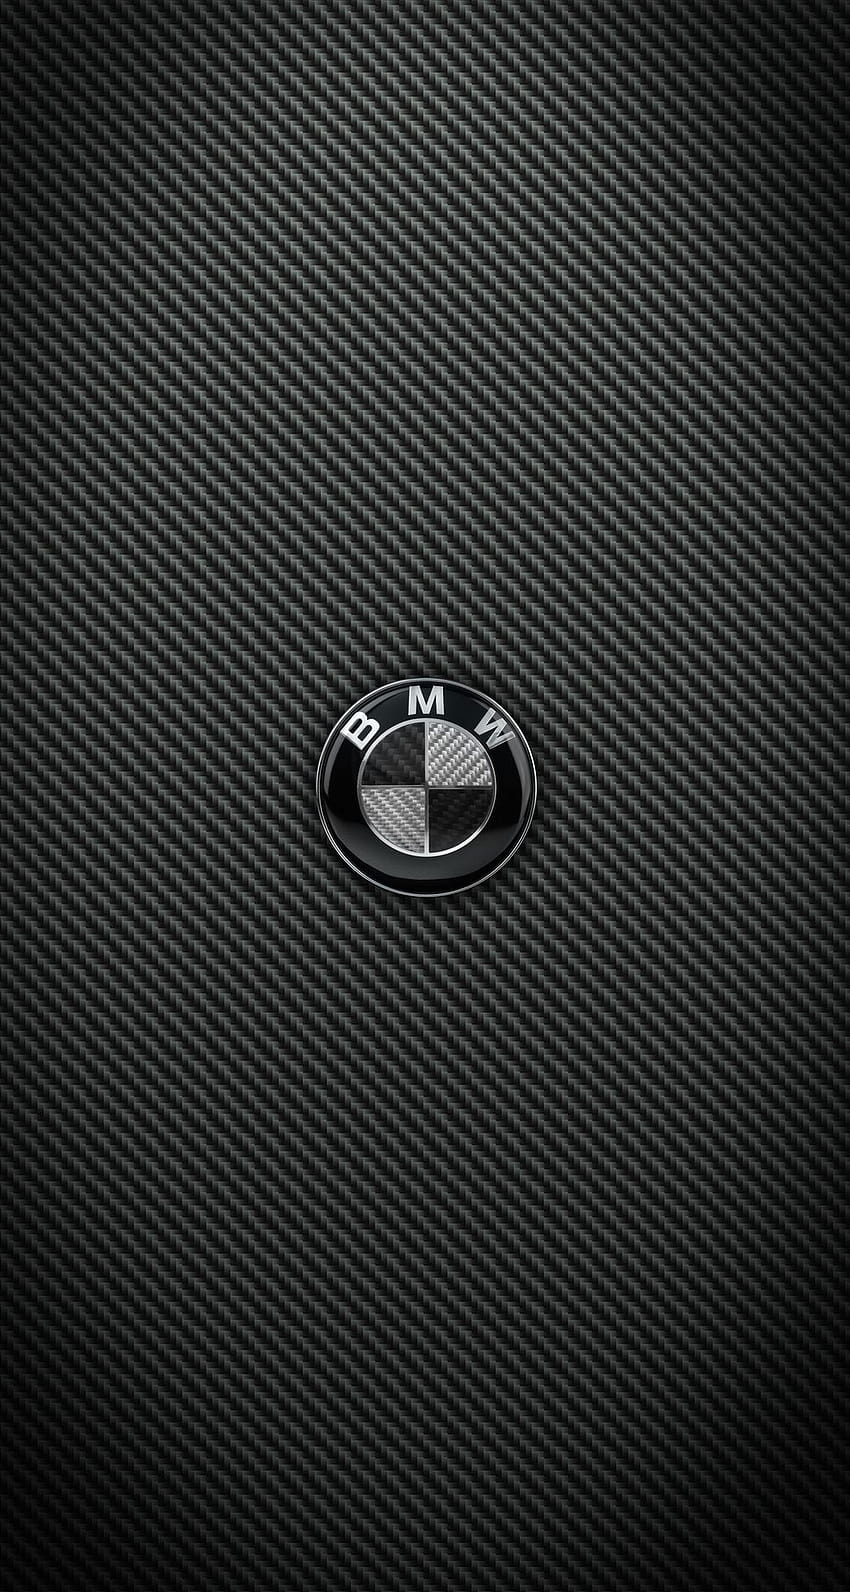 BMW Carbon Fiber, m logo HD phone wallpaper